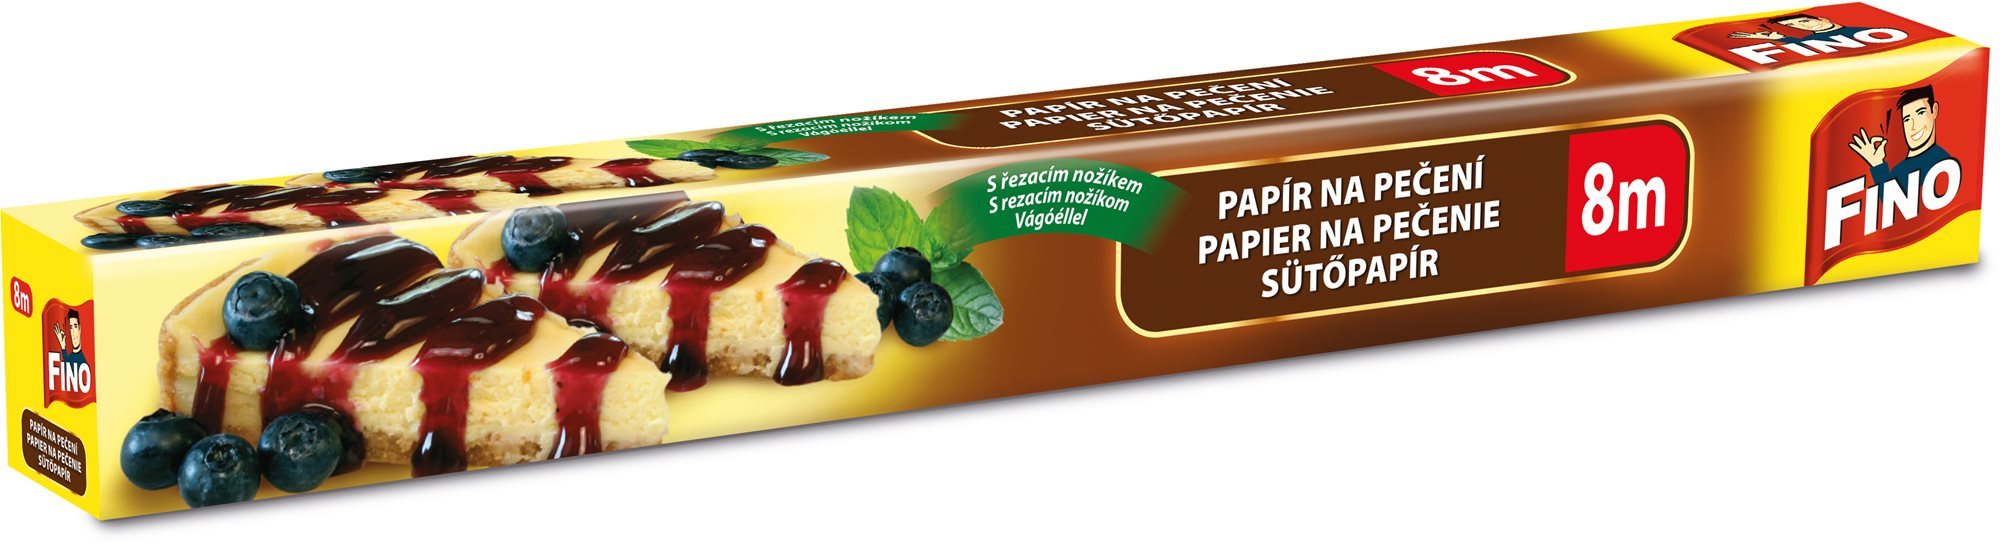 Sütőpapír FINO sütőpapír